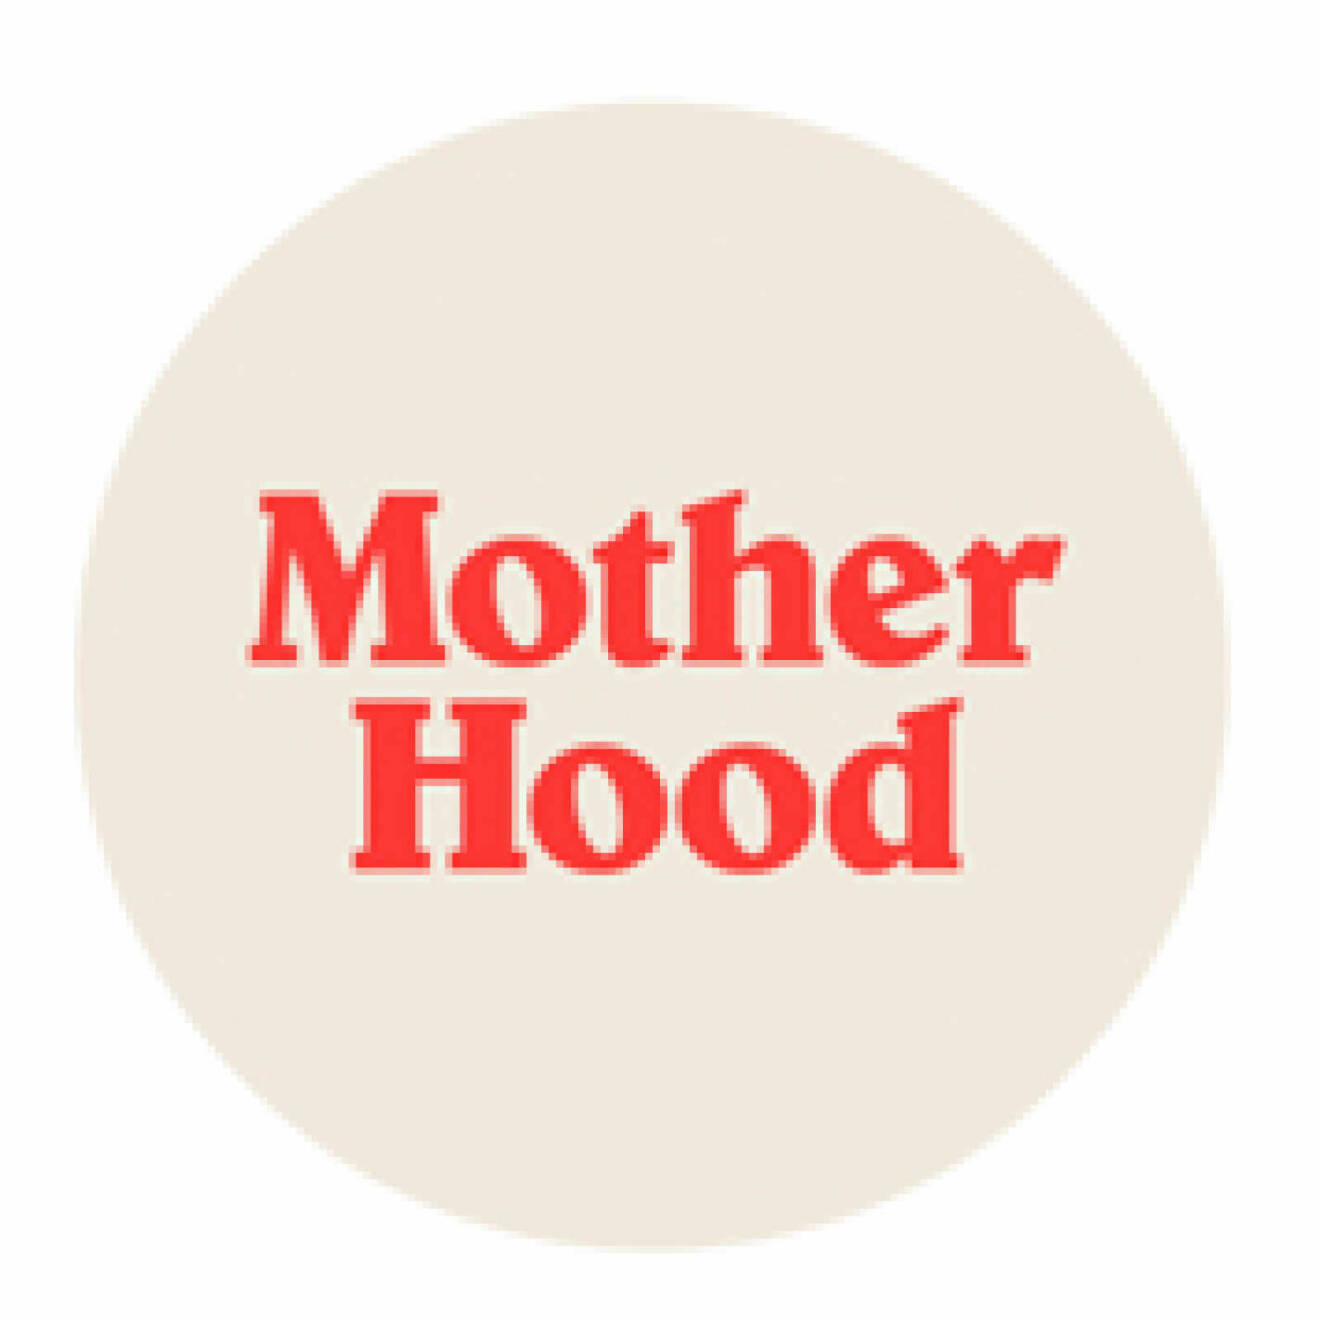 https://image.mabra.com/motherhood-logo-biline.jpg.jpg?imageId=6441816&x=0&y=0&cropw=100&croph=100&width=1318&height=1318